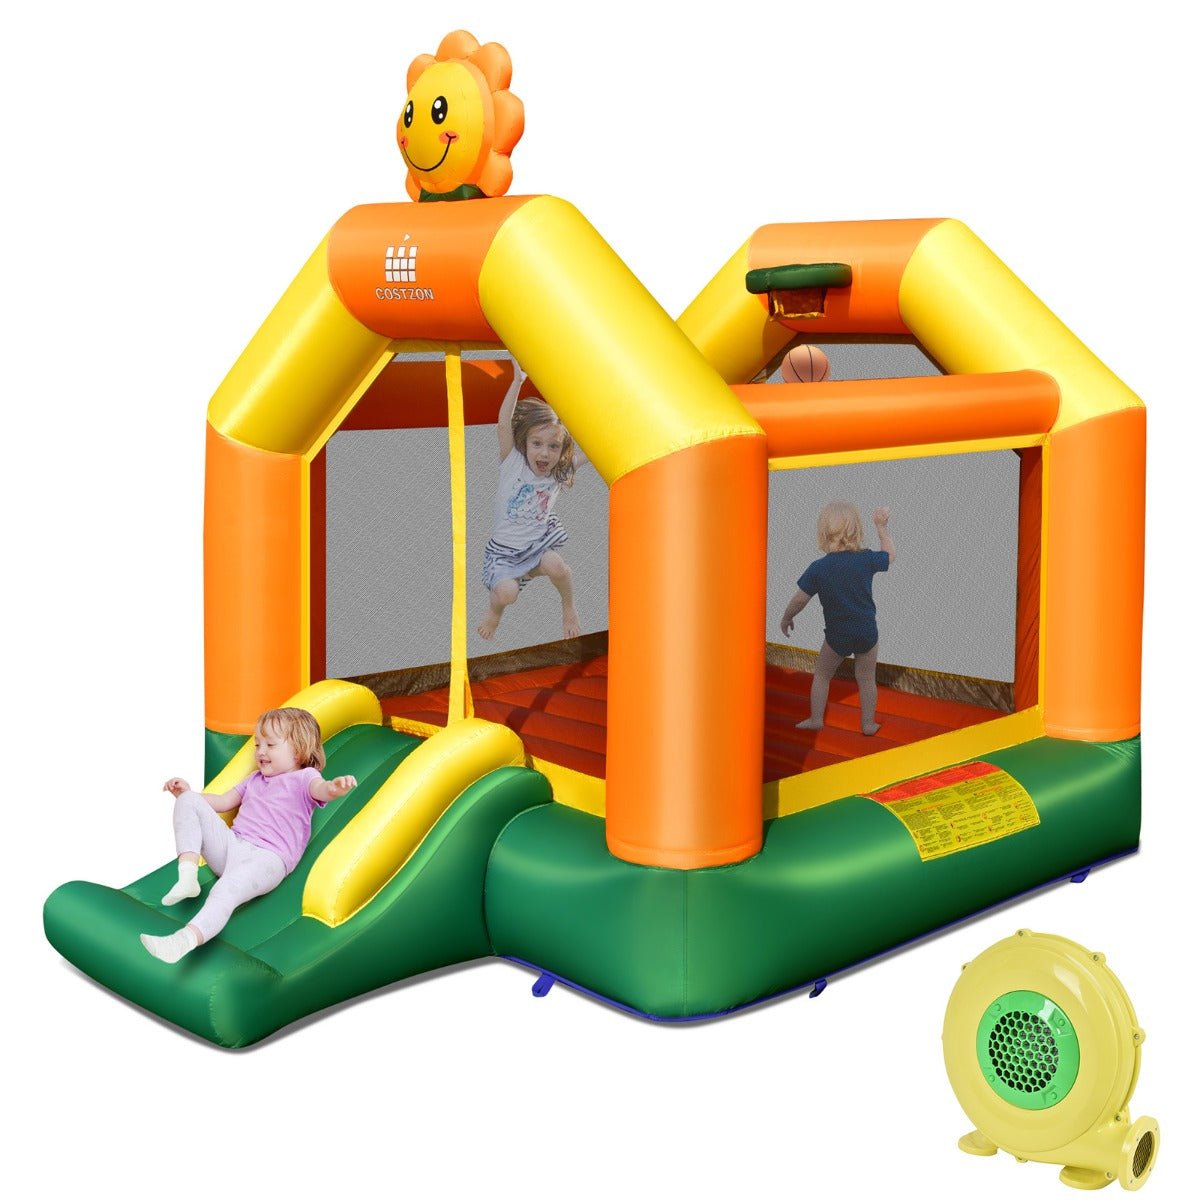 Kids Sunflower Bounce House - Slide into Joyful Playtime